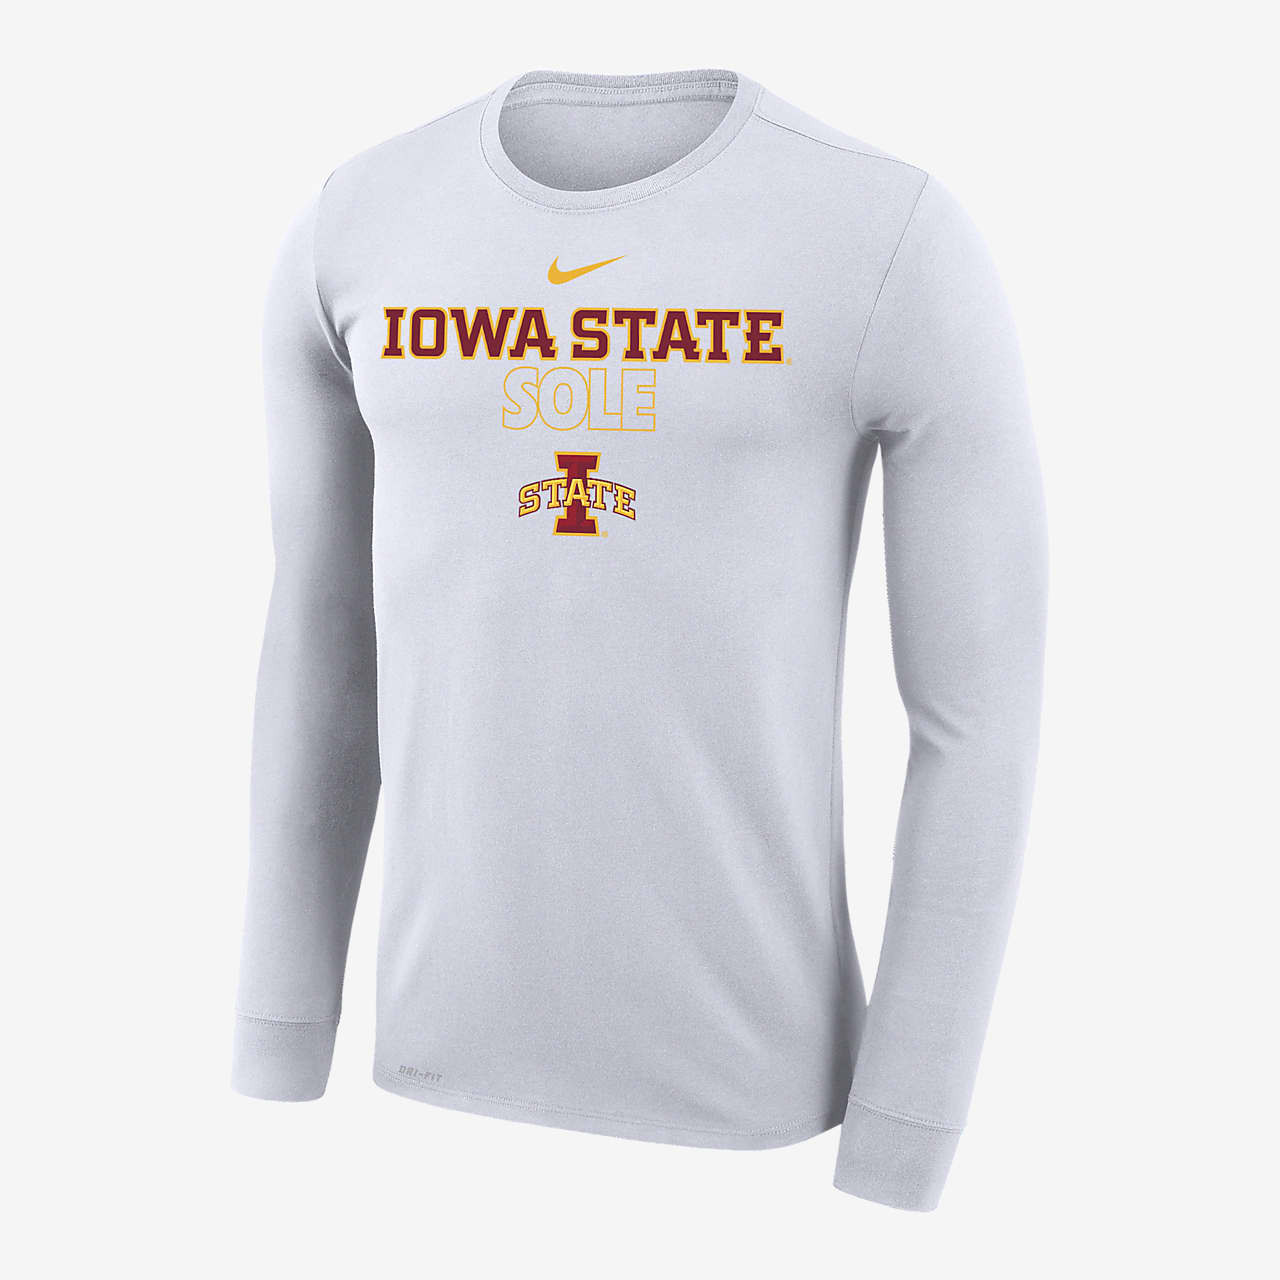 Iowa State Men's Nike Dri-FIT College Long-Sleeve T-Shirt.